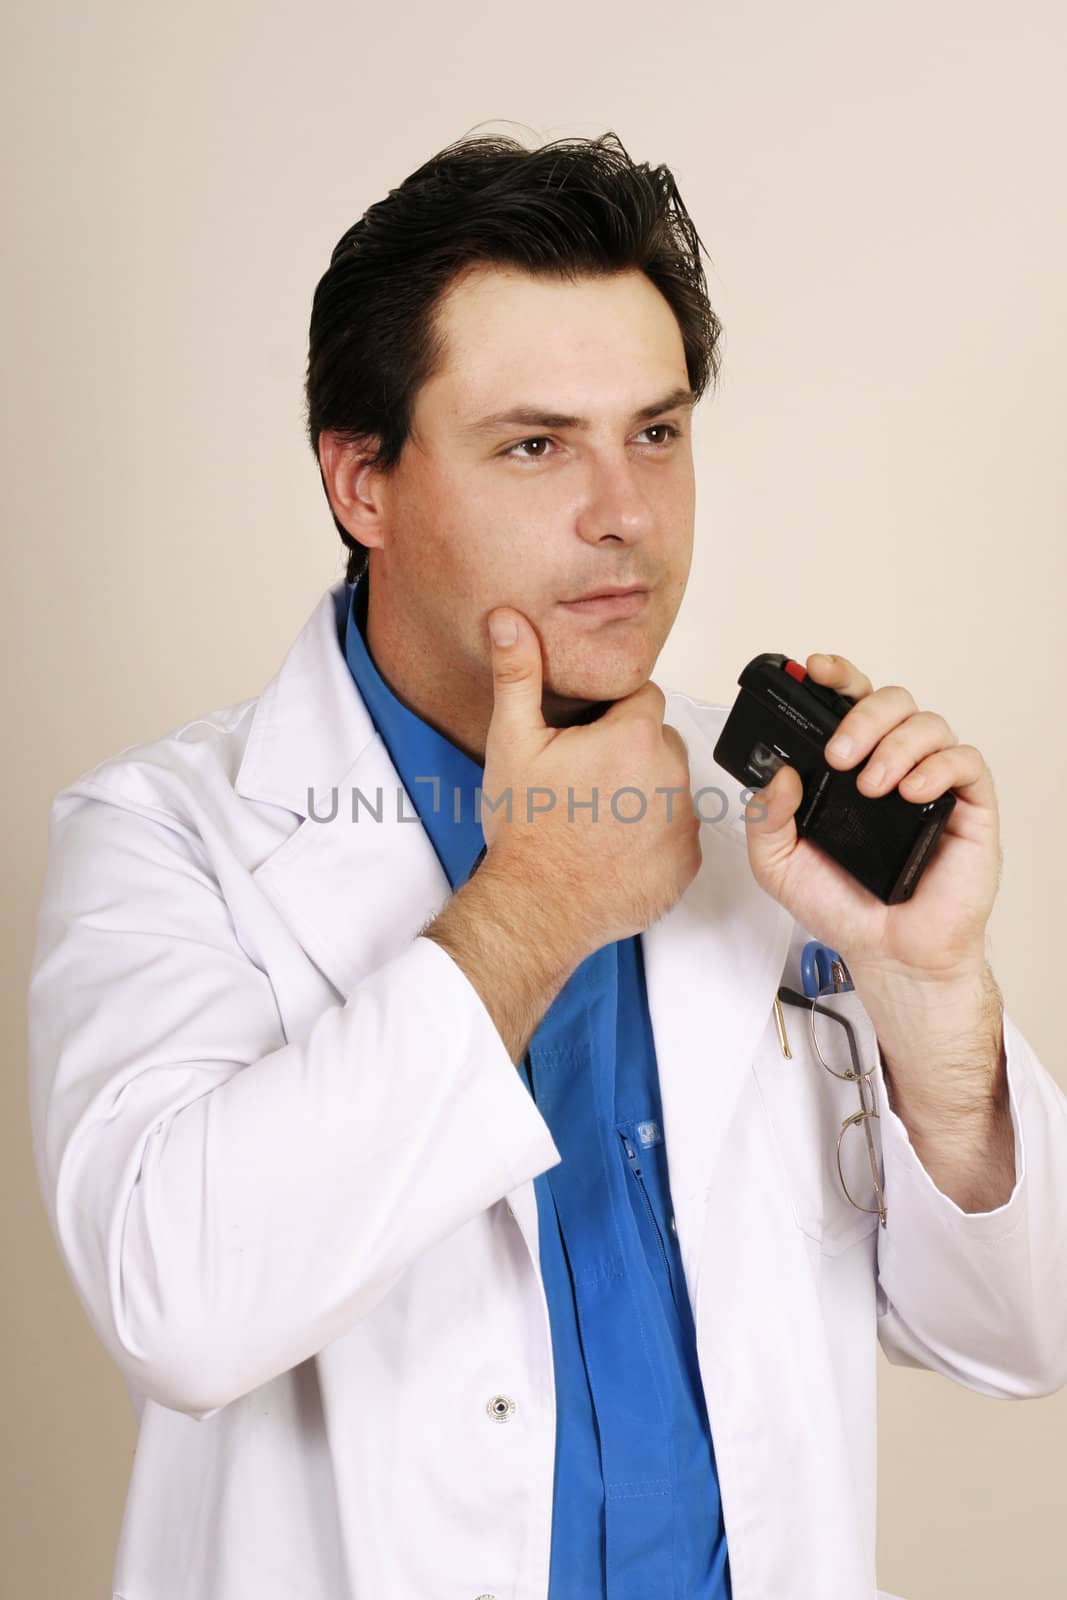 Doctor recording patient information